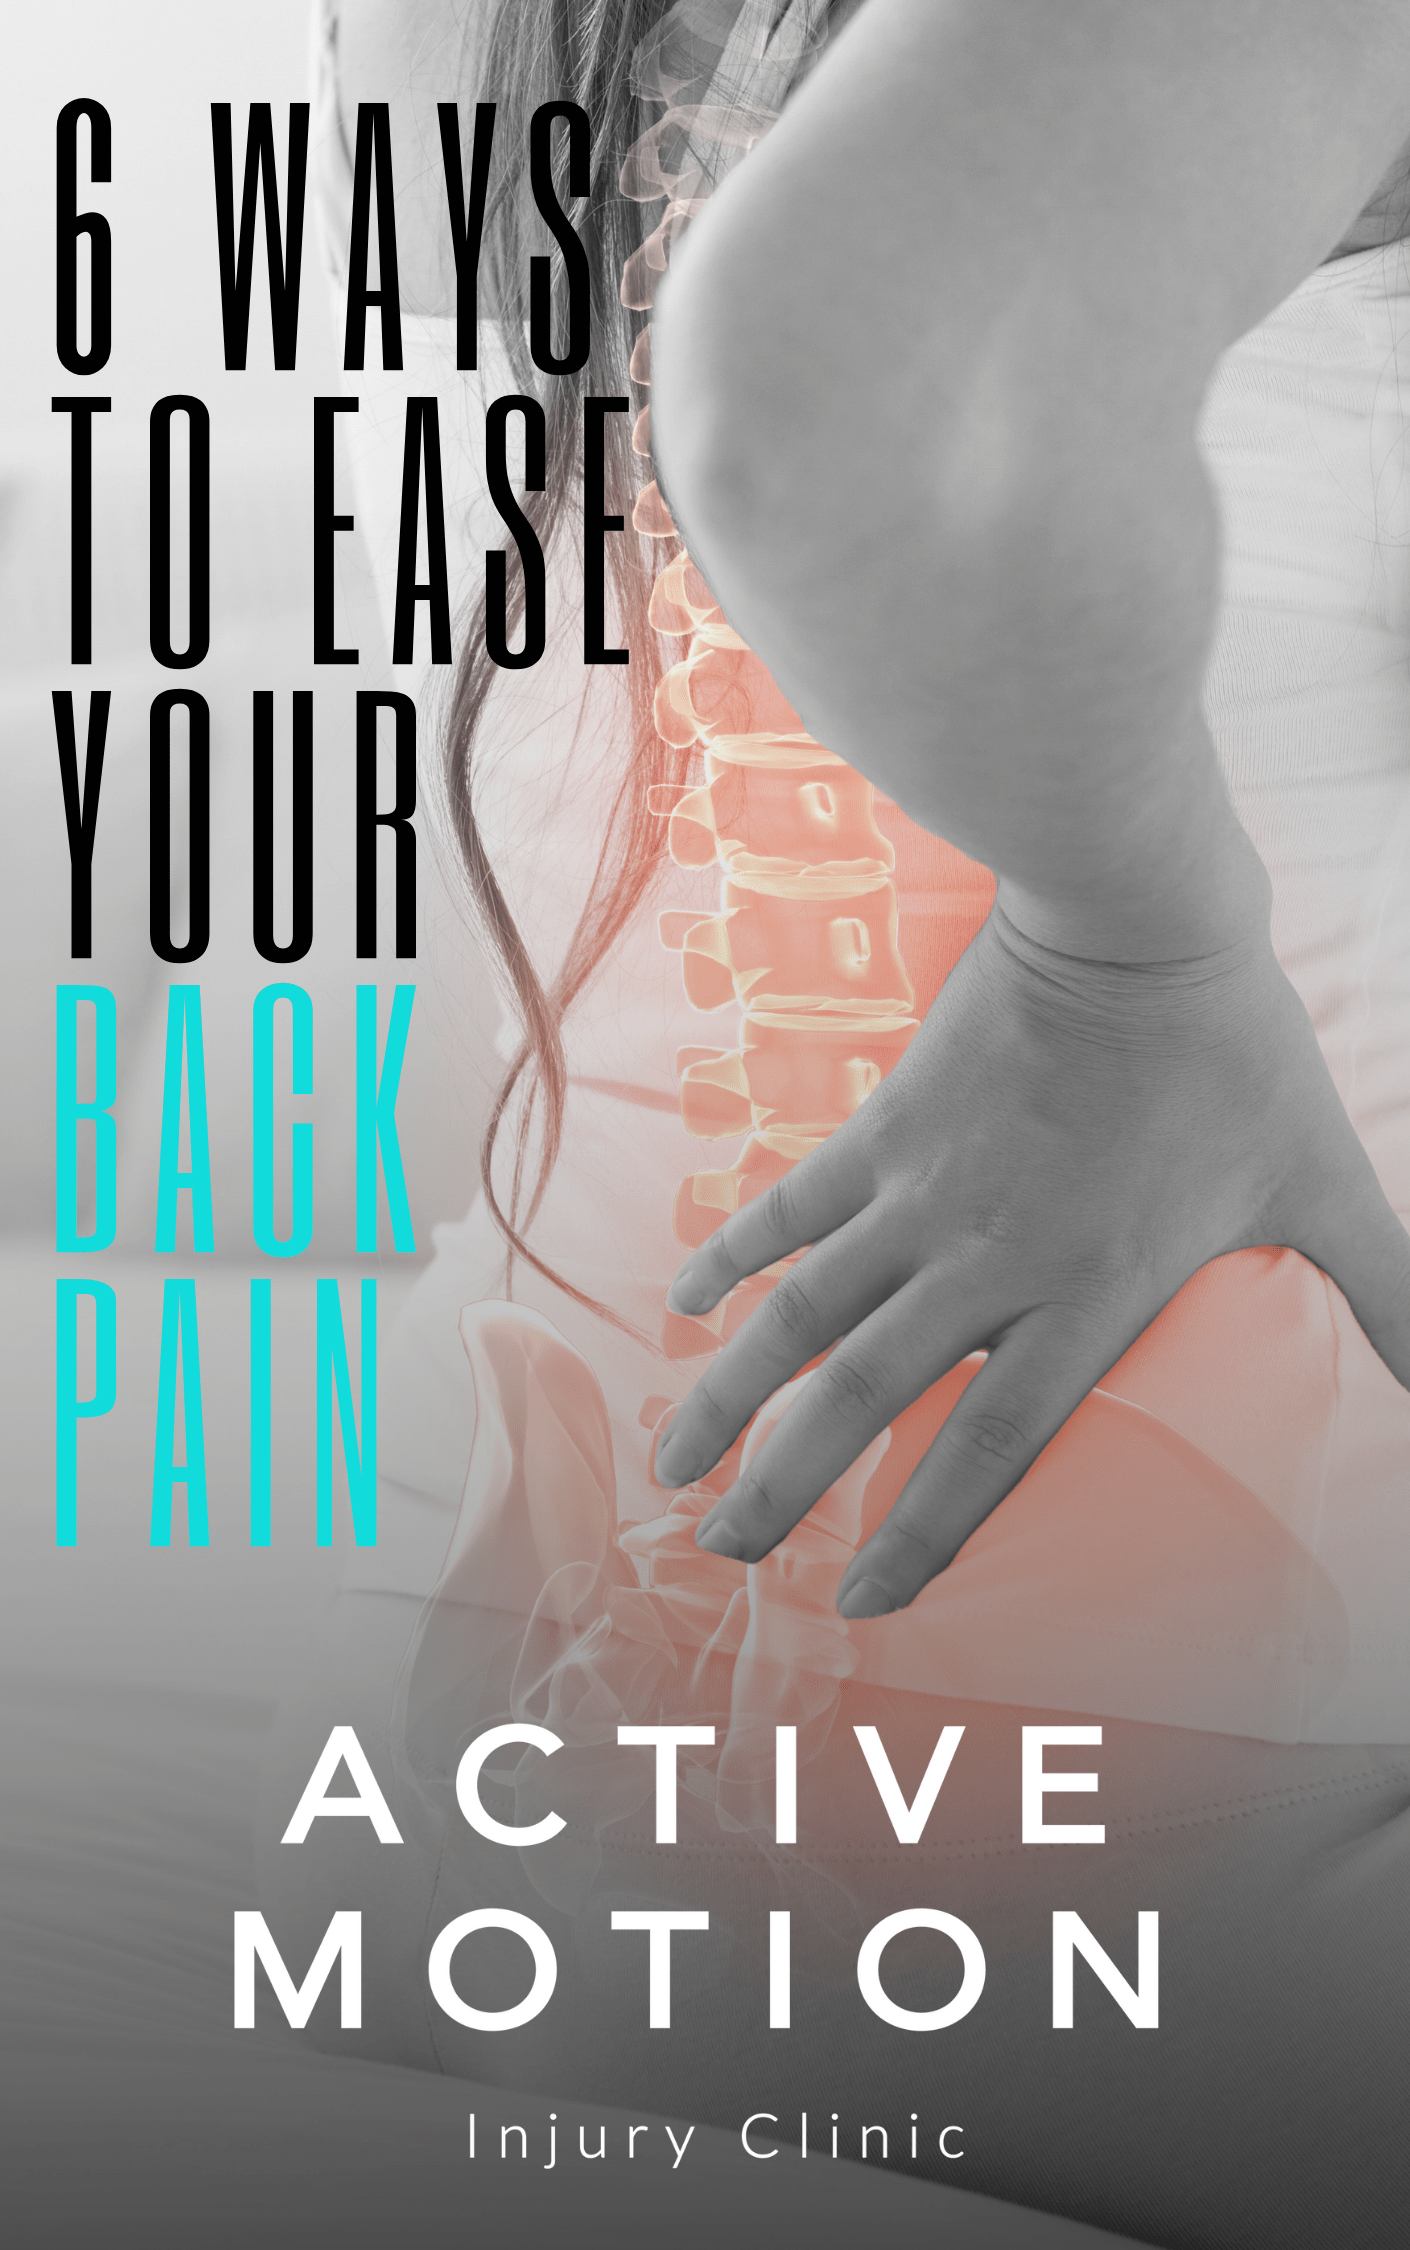 Back Pain Advice Guide